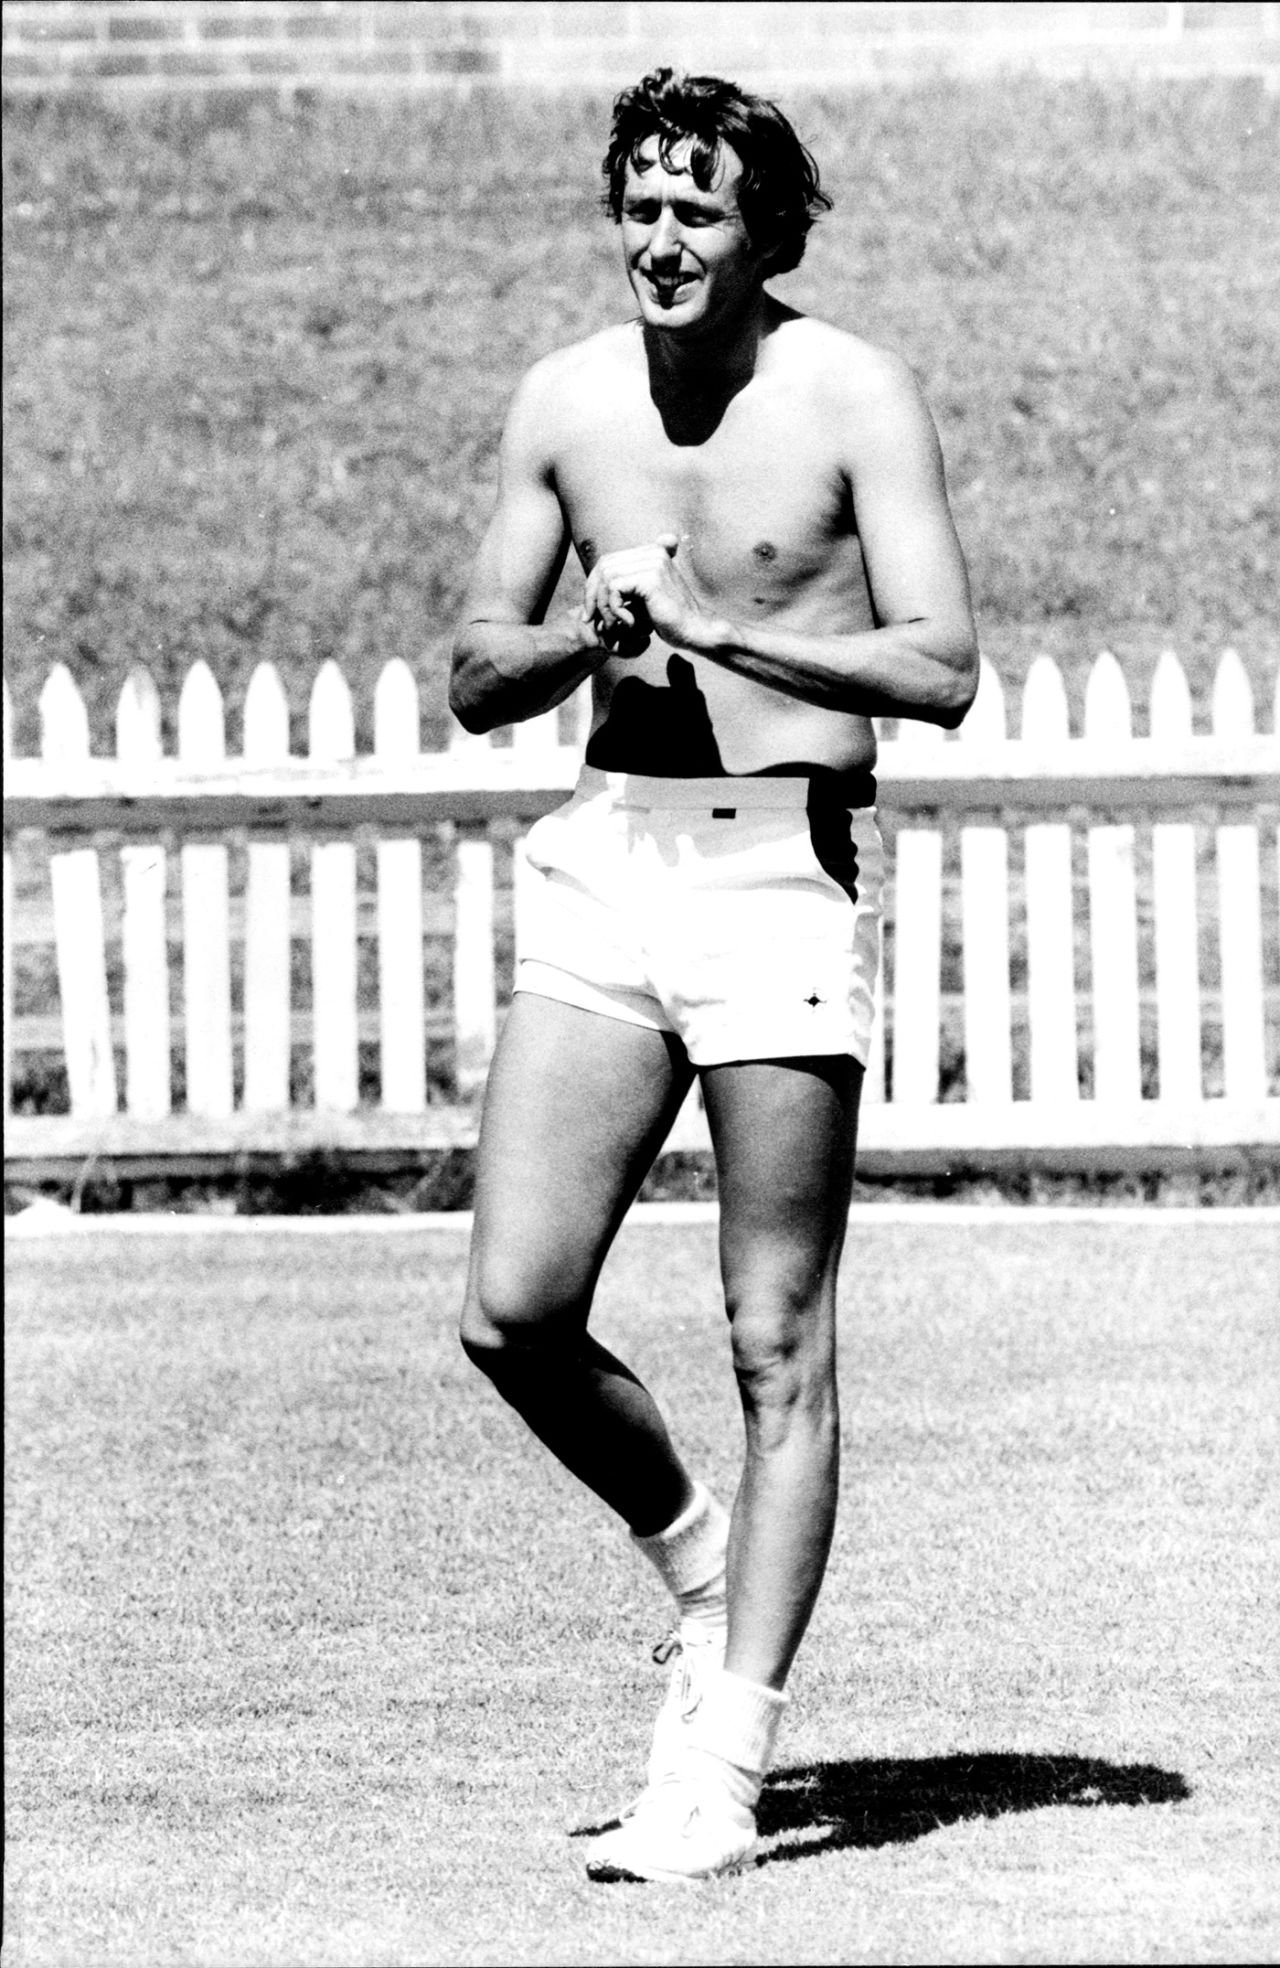 Mike Hendrick trains ahead of the Sydney Test, Sydney, January 5, 1979